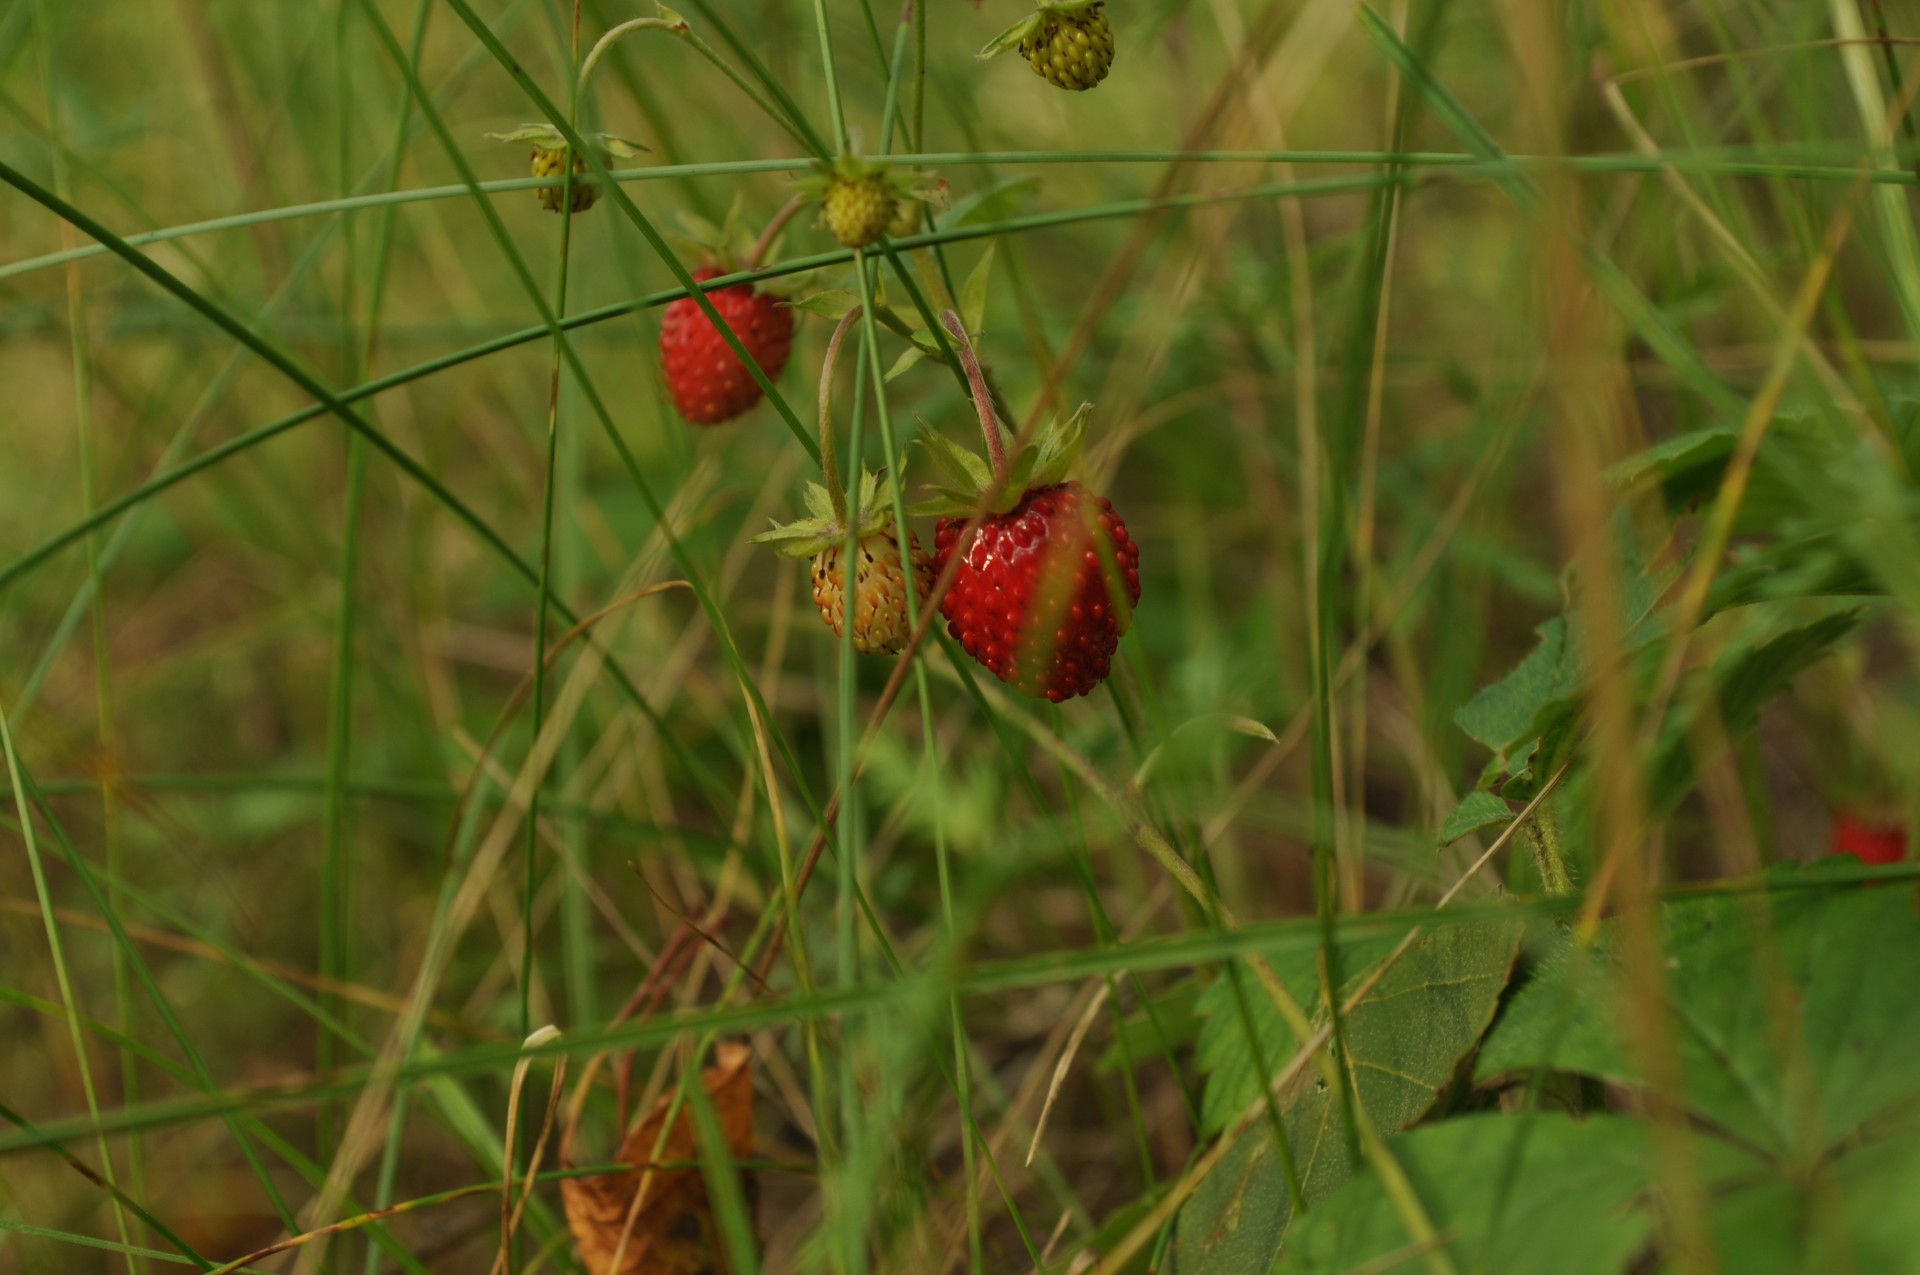 wild strawberry in the grass